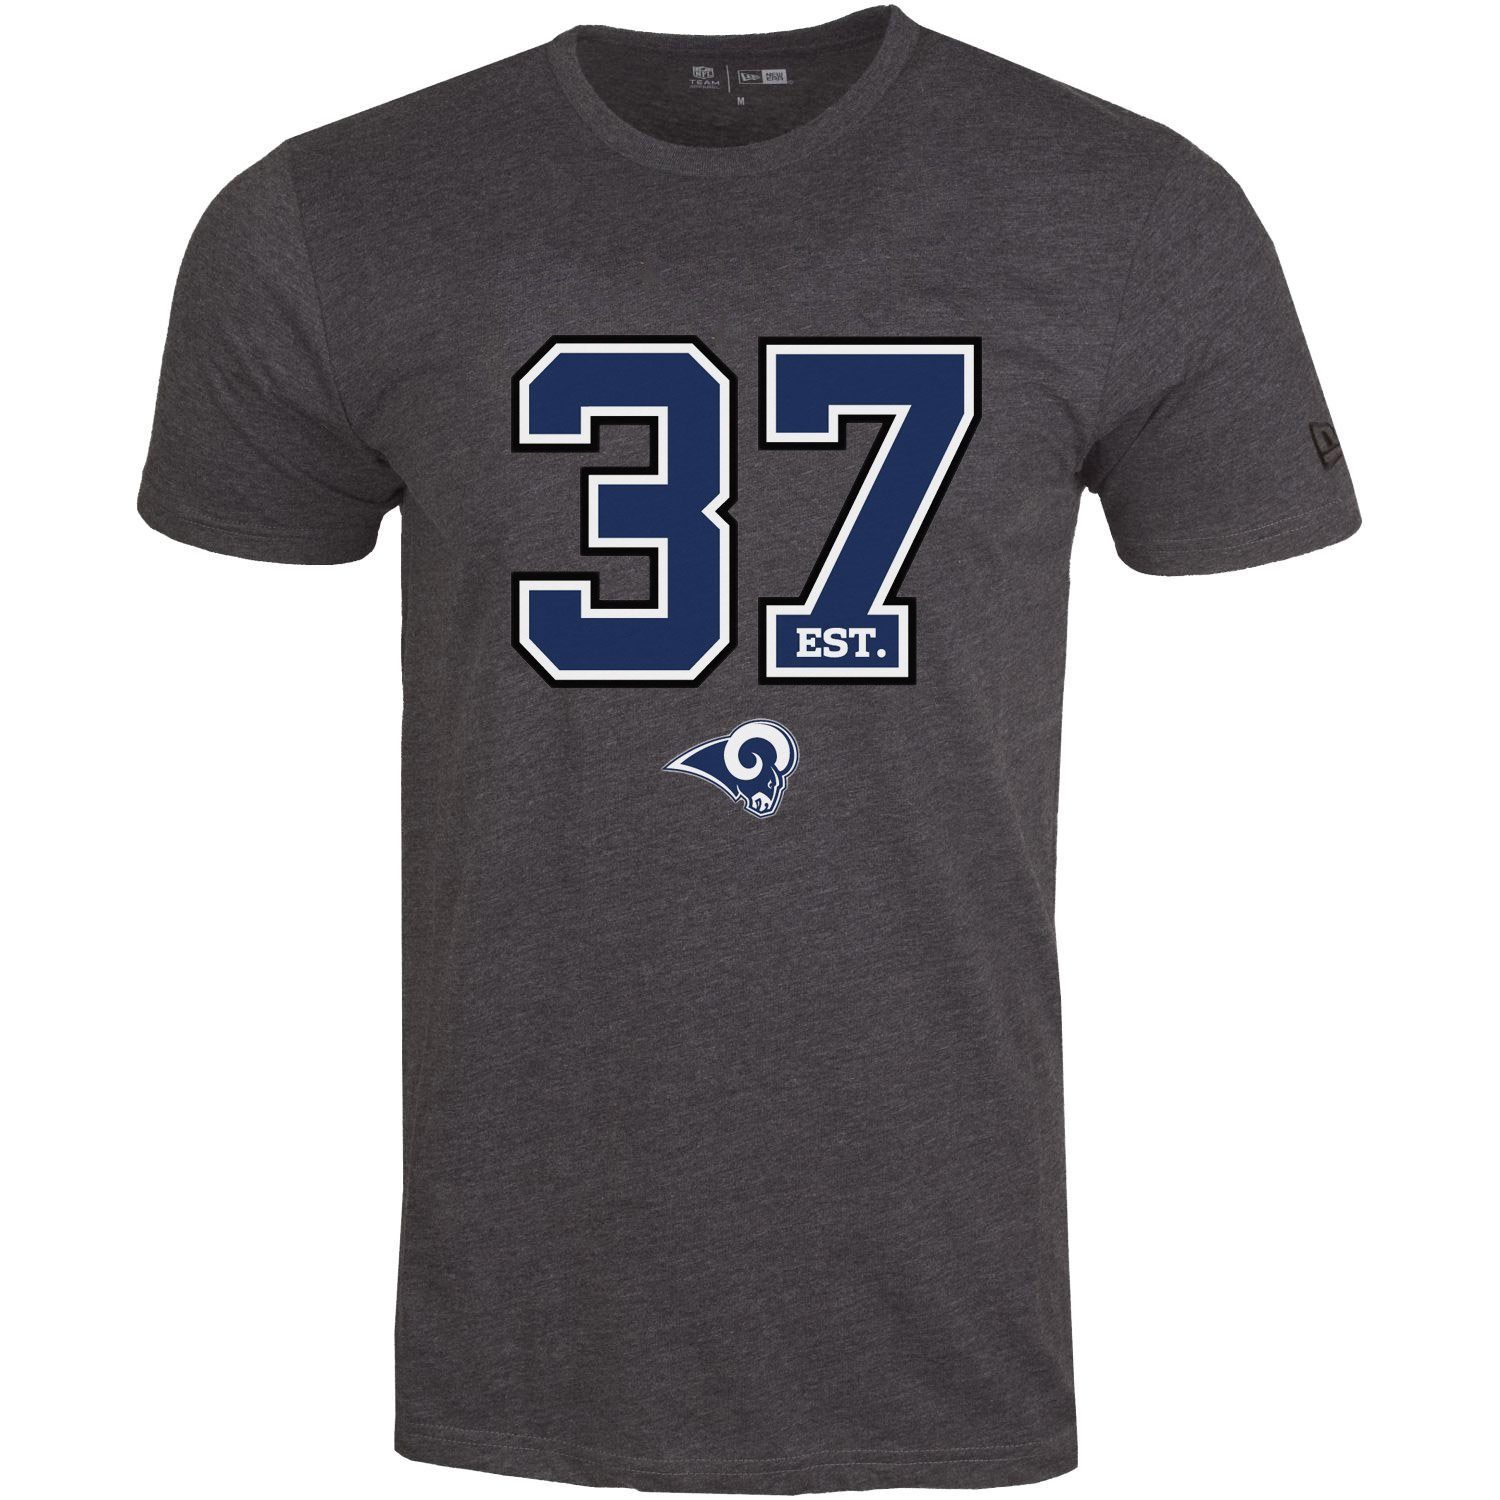 Los LOGO Angeles Print-Shirt Era Rams New ESTABLISHED NFL